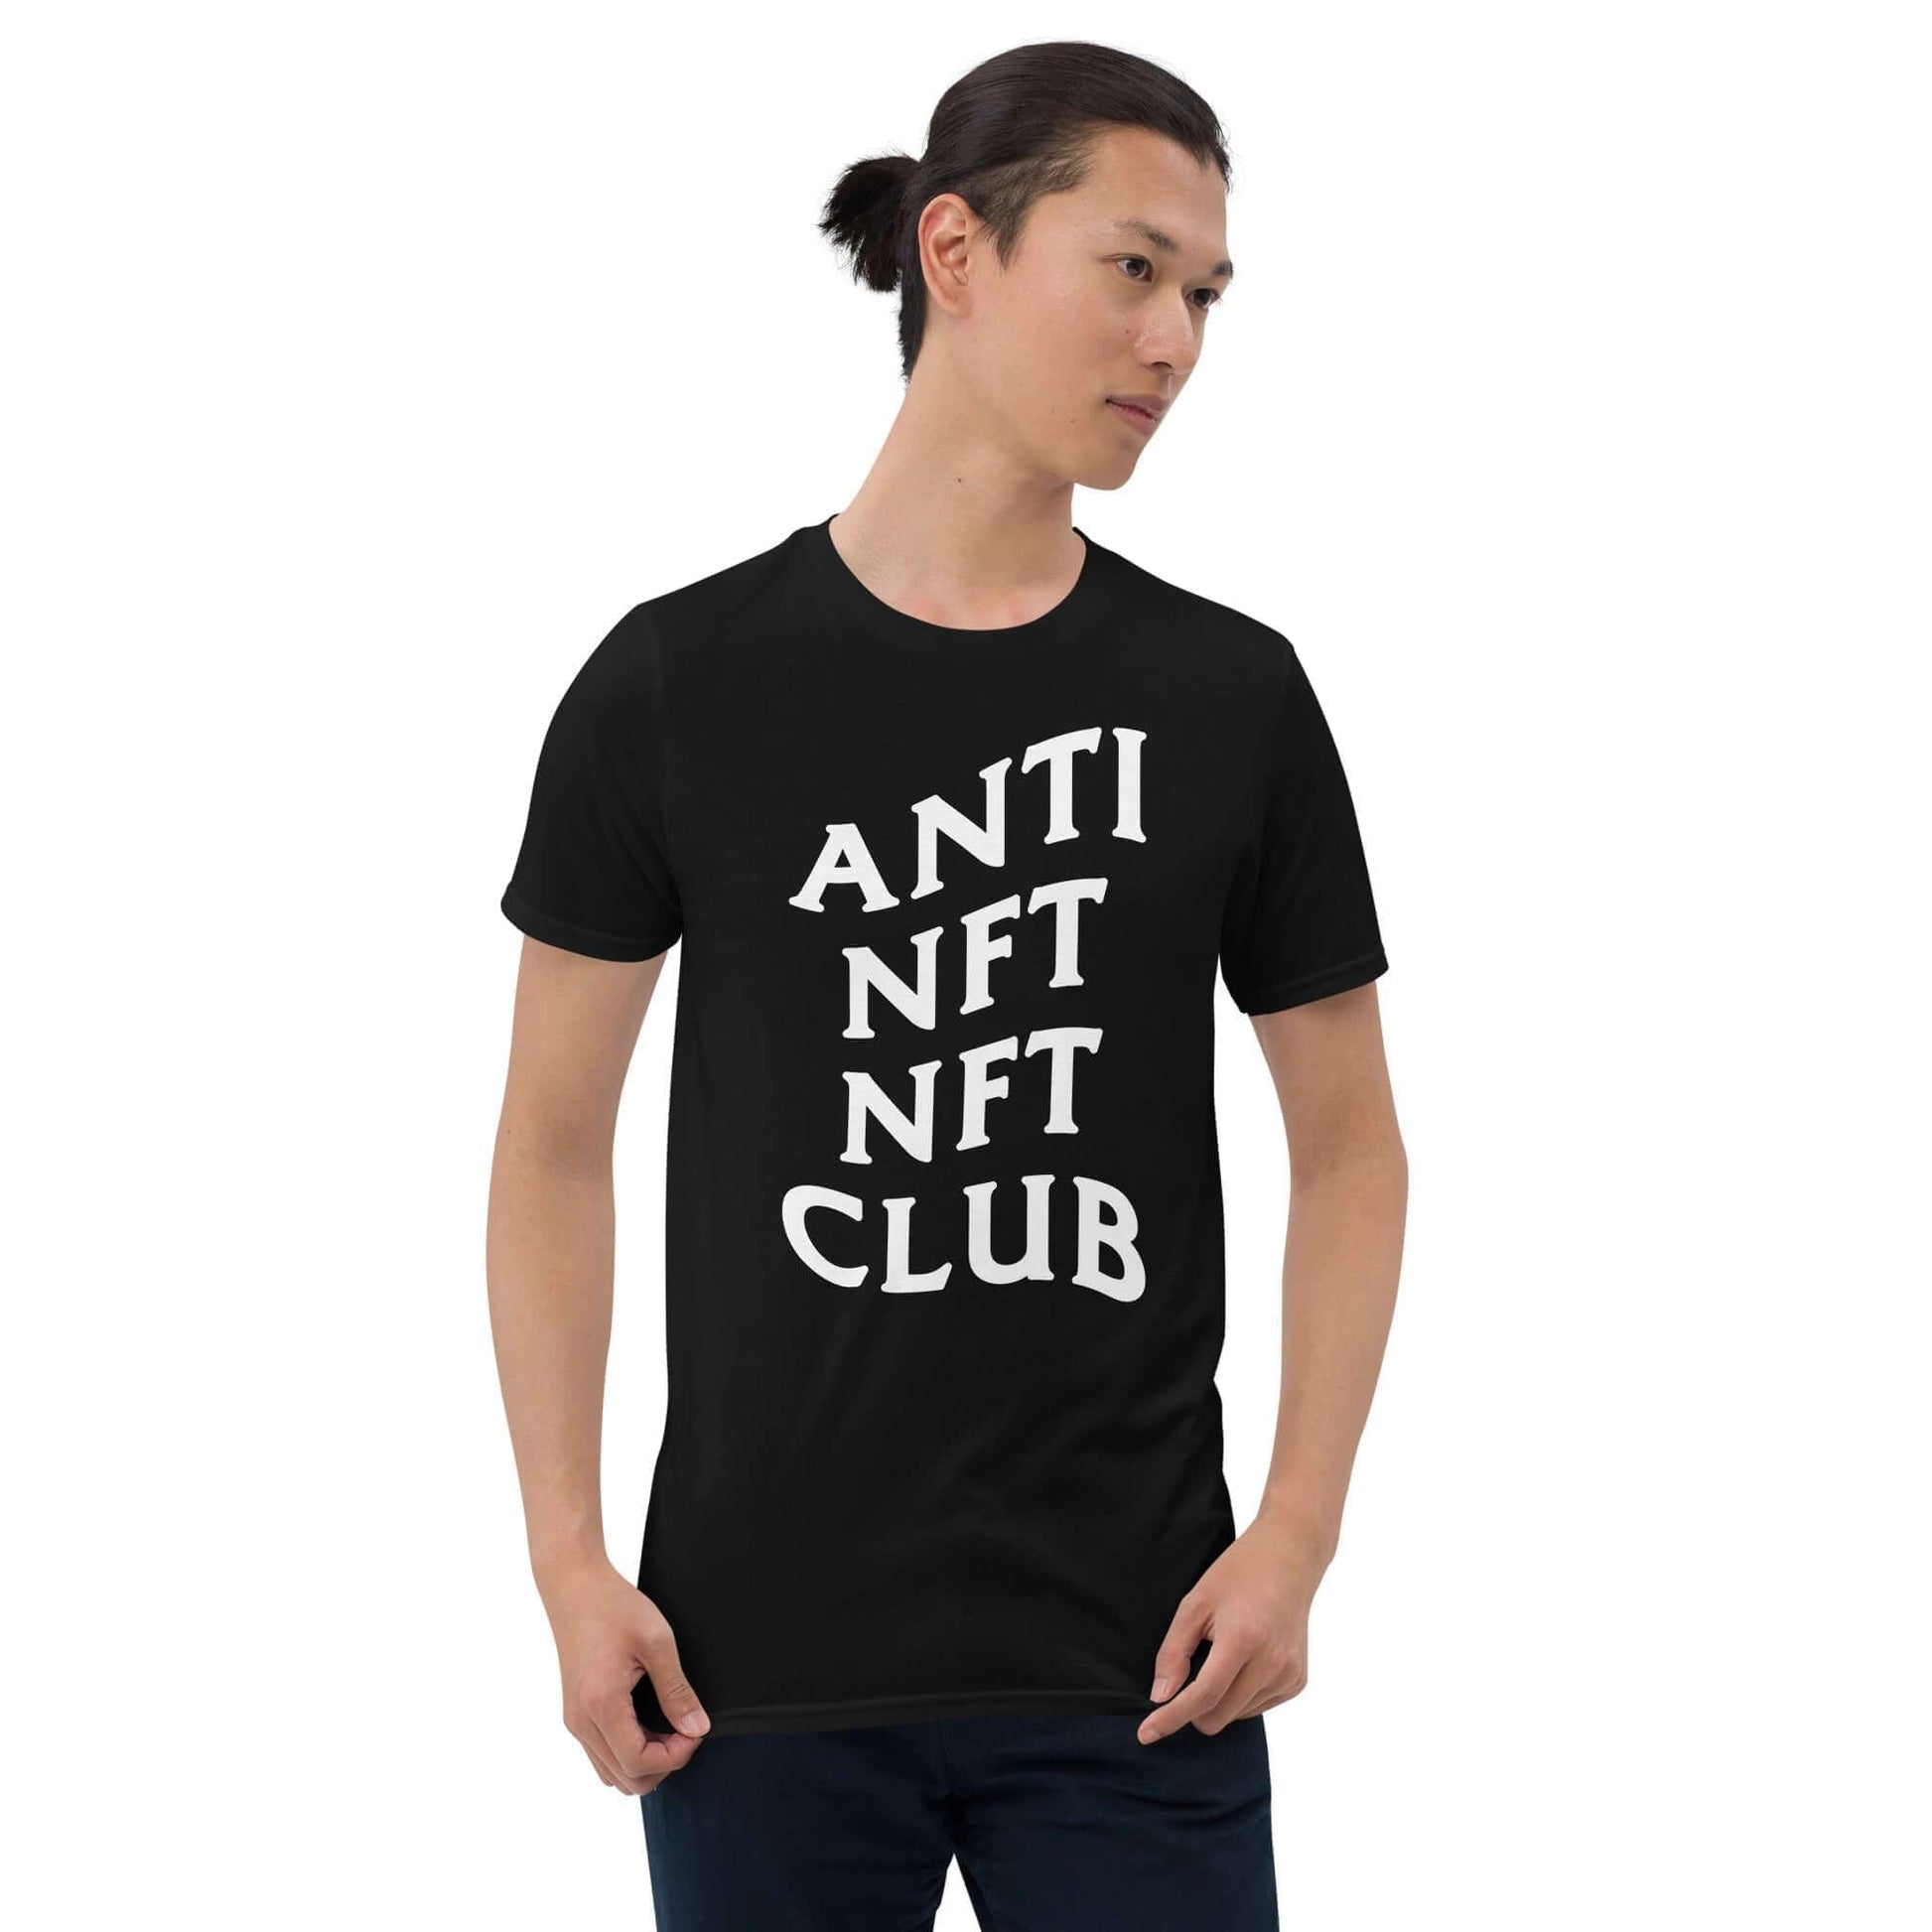 Anti NFT NFT Club Unisex T-Shirt Black